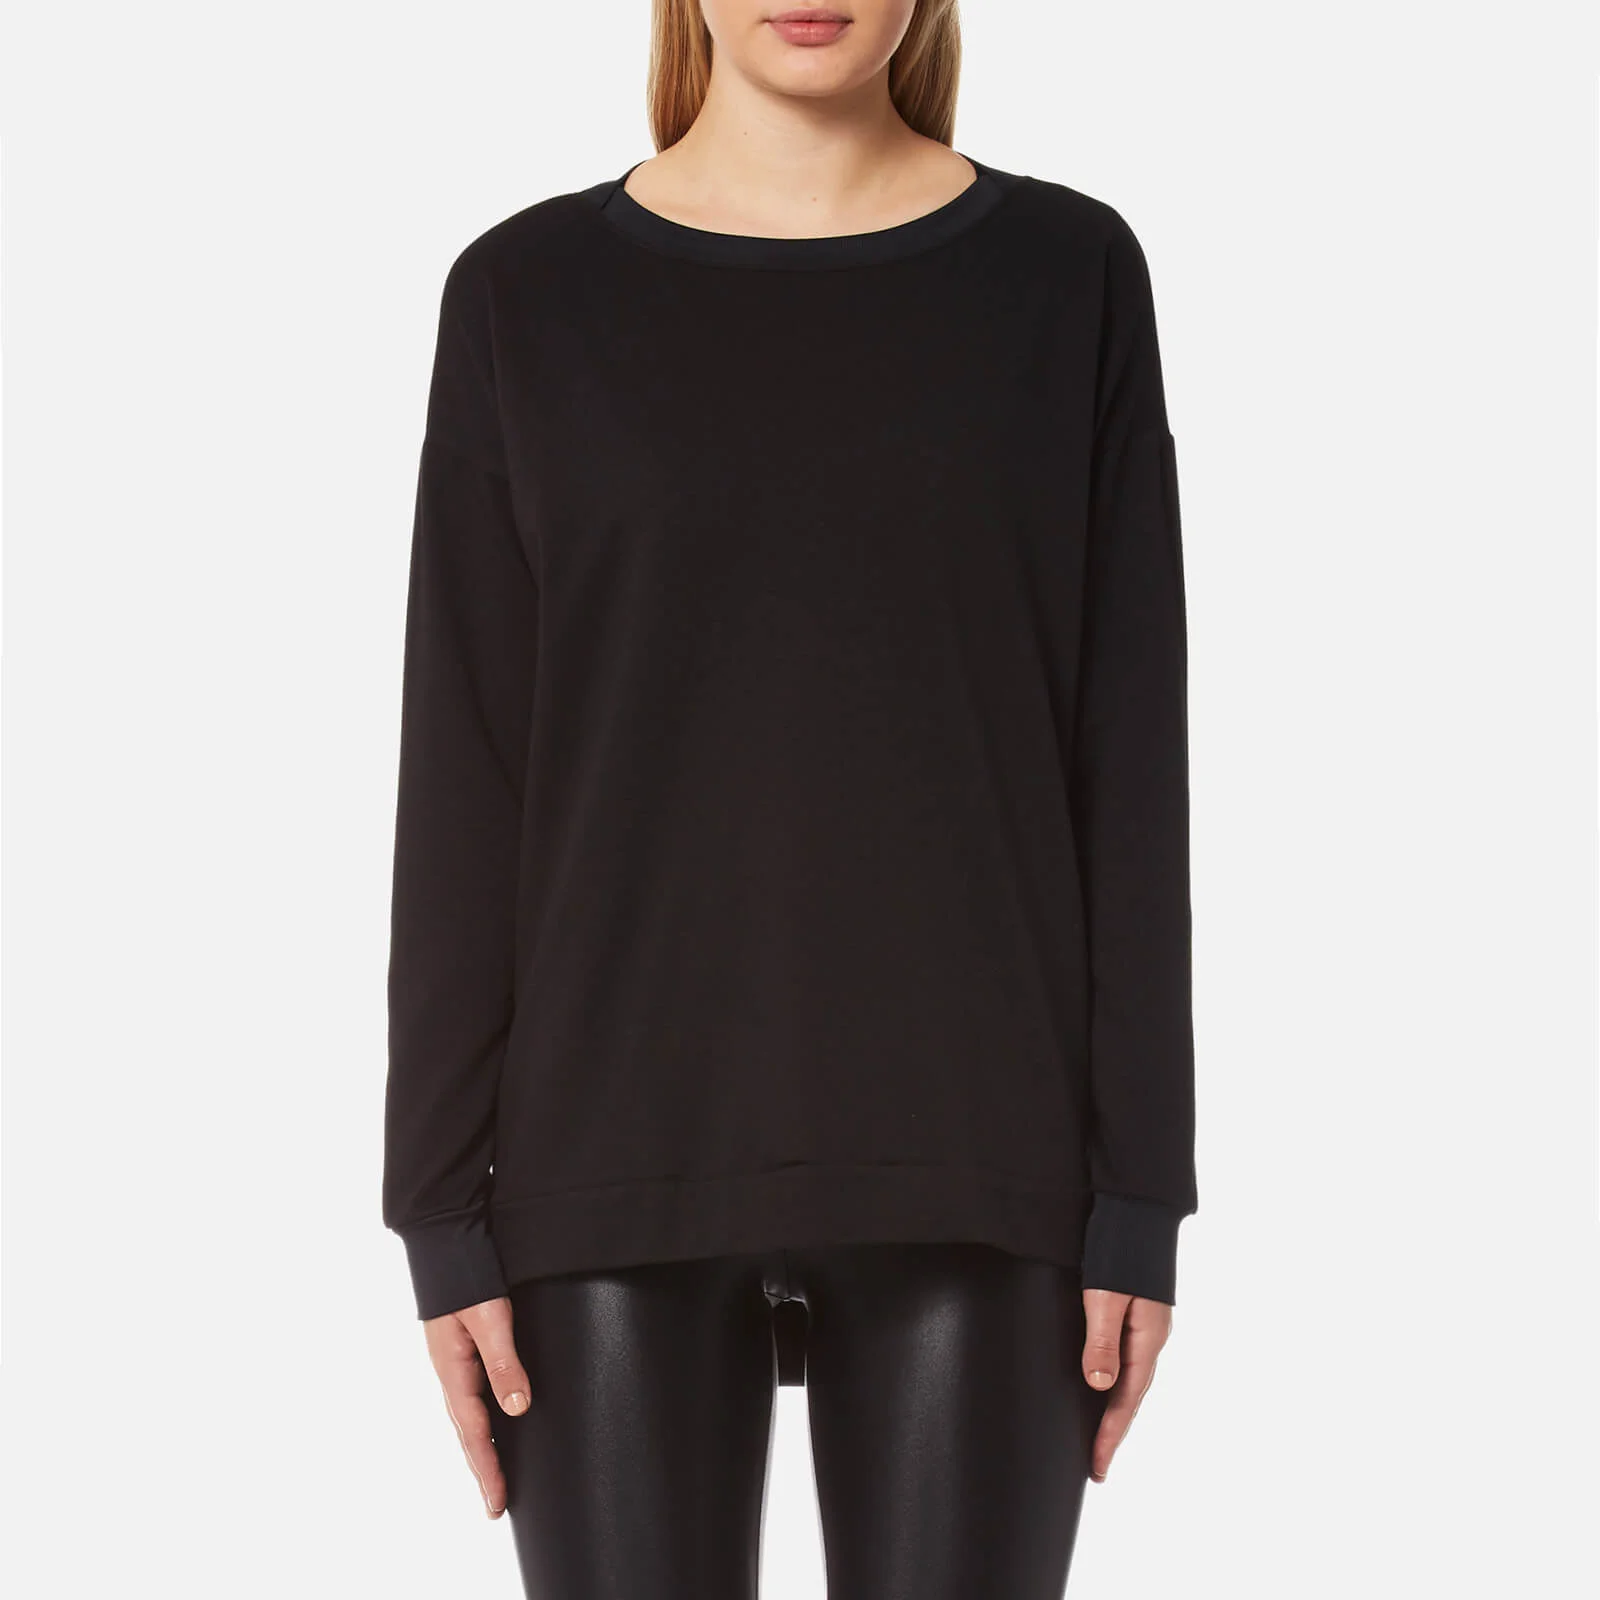 Koral Women's Bristol Pullover Sweatshirt - Black Image 1